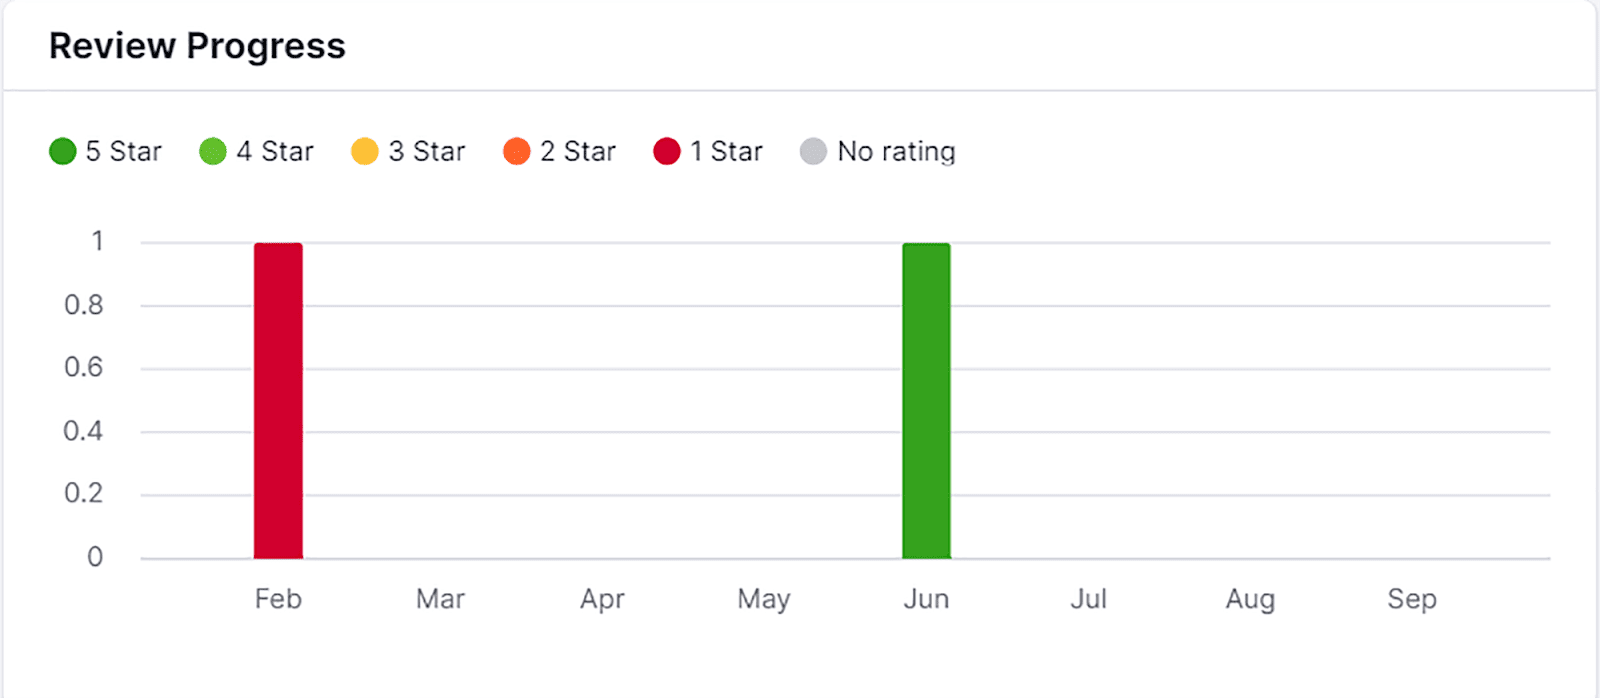 Company star ratings